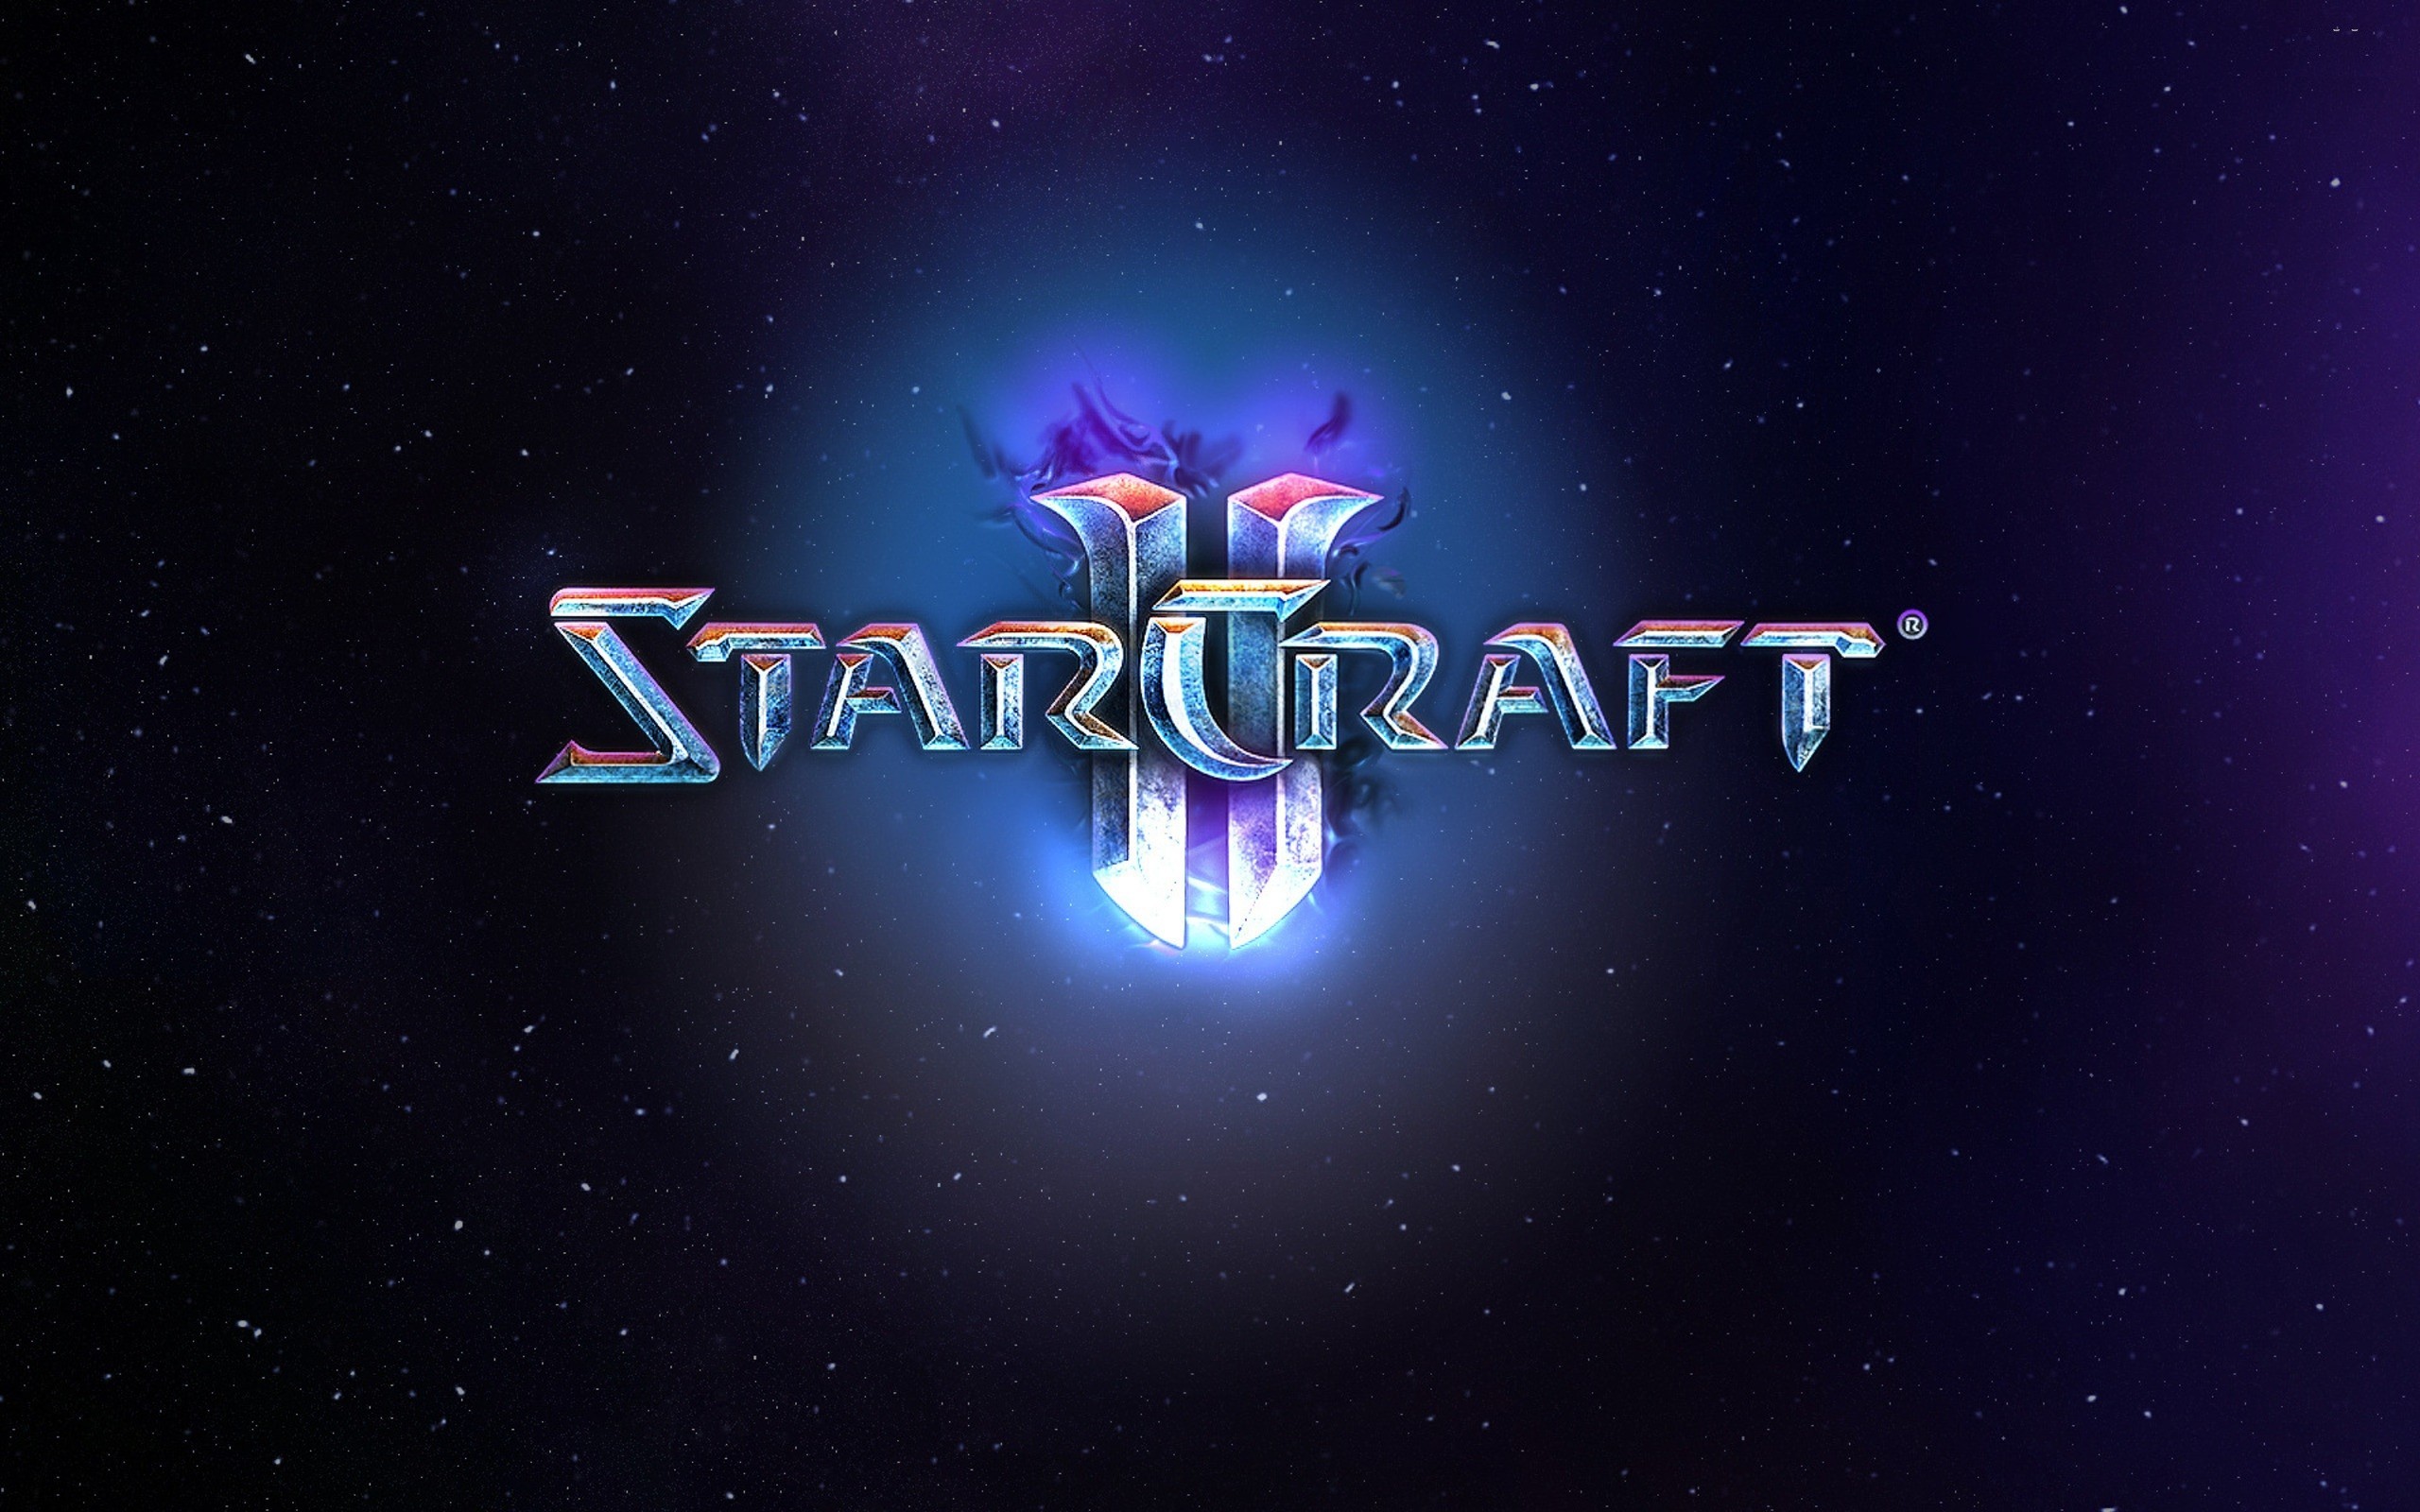 General 2560x1600 StarCraft Starcraft II video games PC gaming